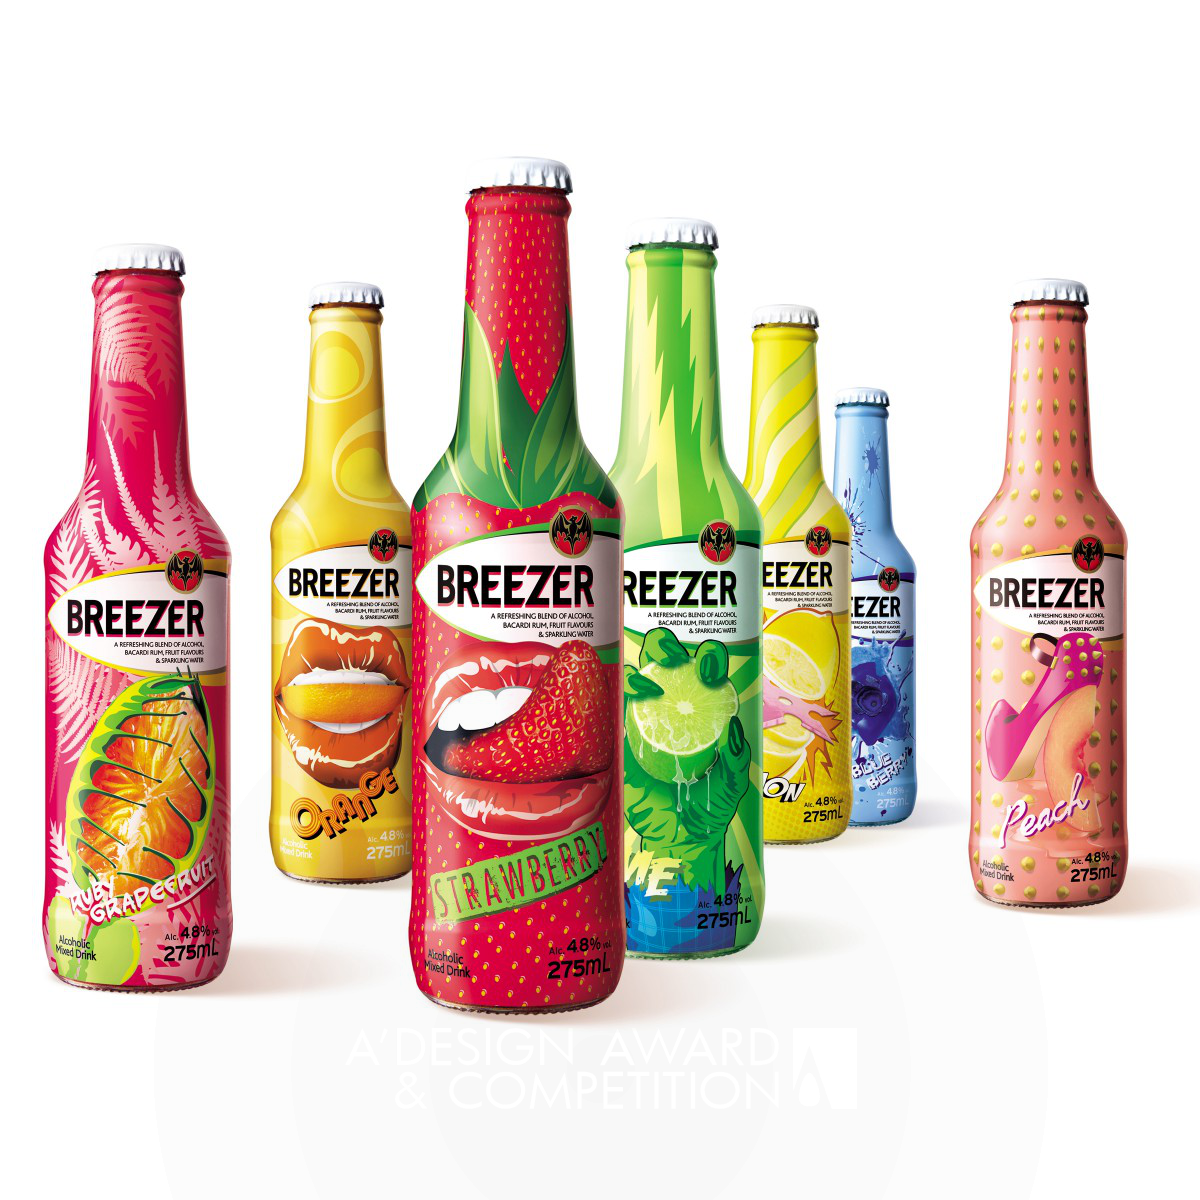 Breezer Be Bold Limited Edition Spirits by Interbrand Shanghai Consumer Brand Team